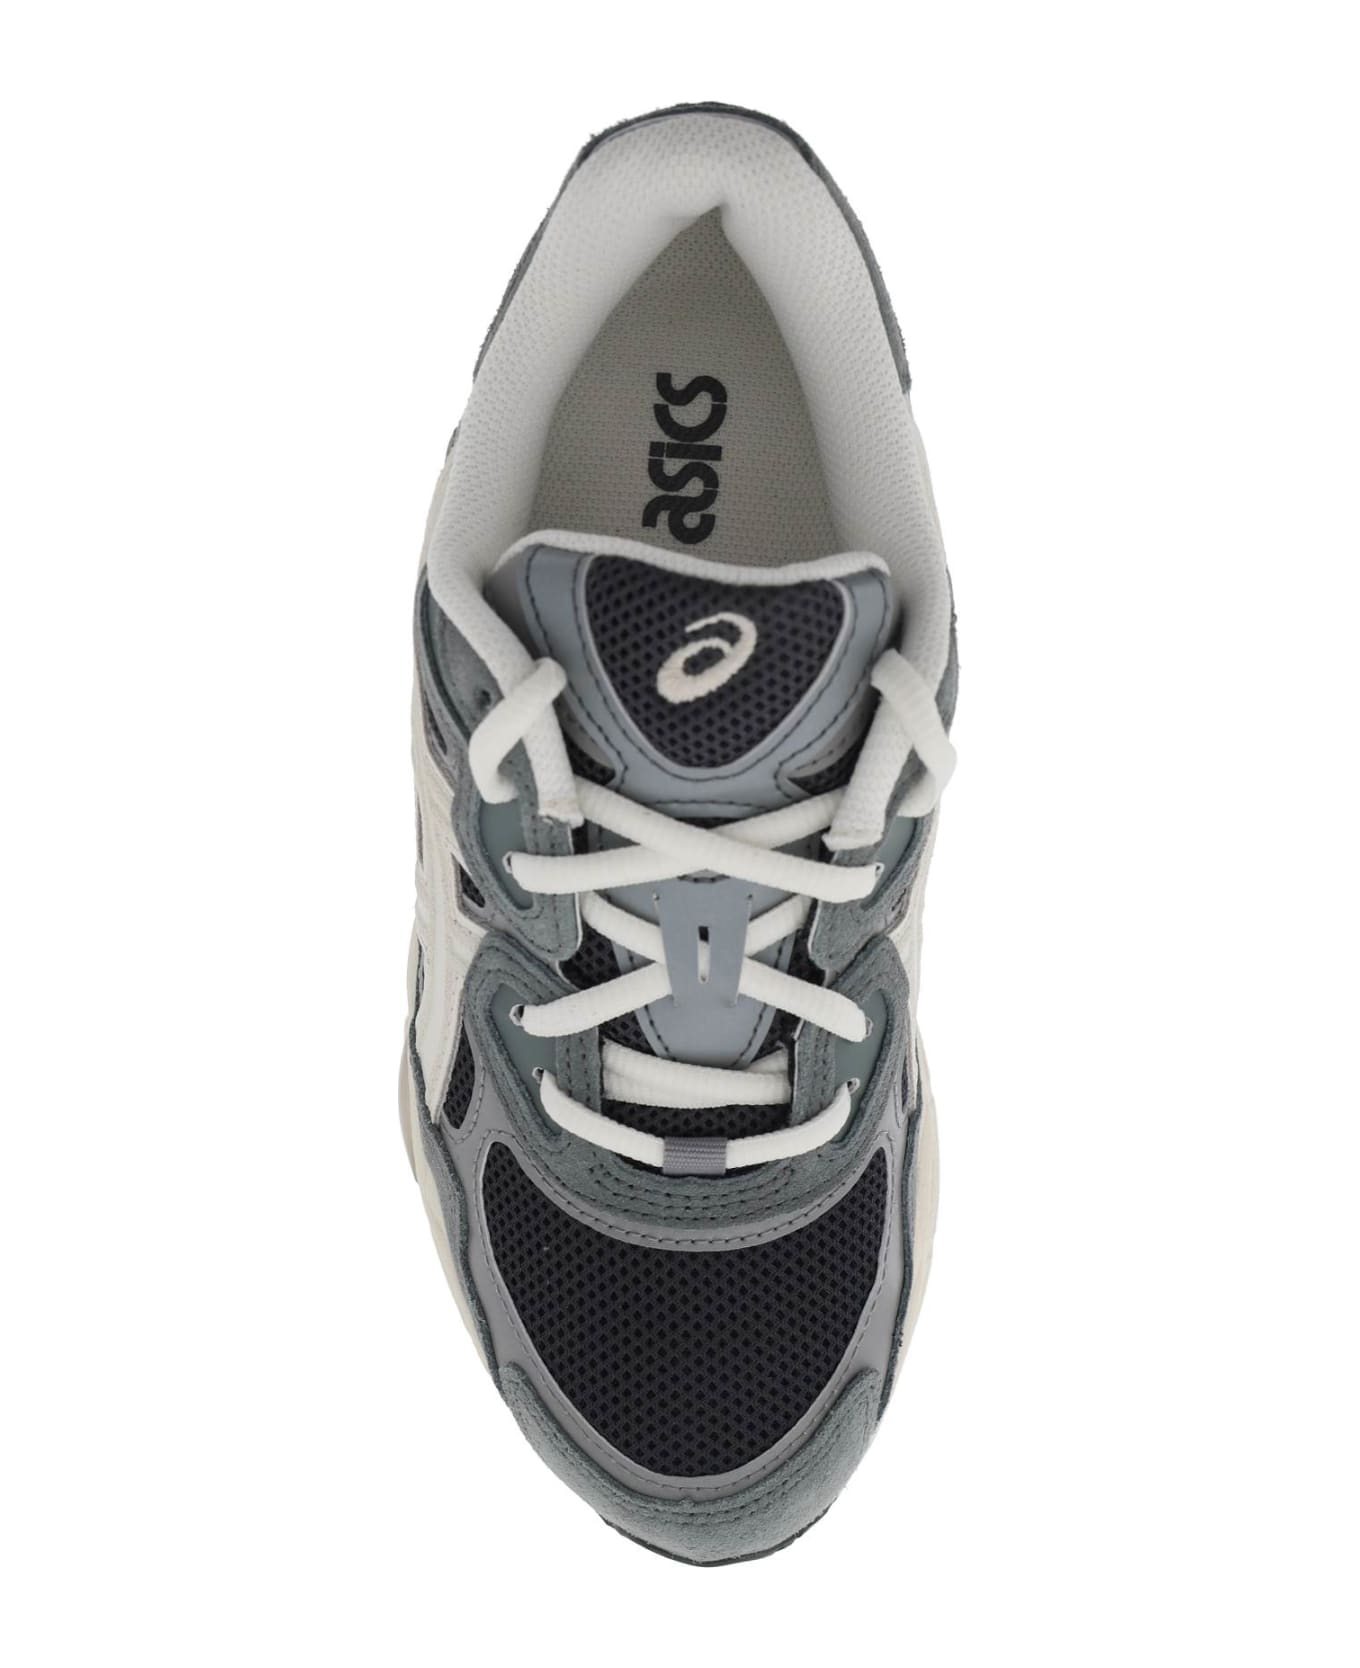 Asics Gel-nyc Sneakers - GRAPHITE GREY SMOKE GREY (Black)